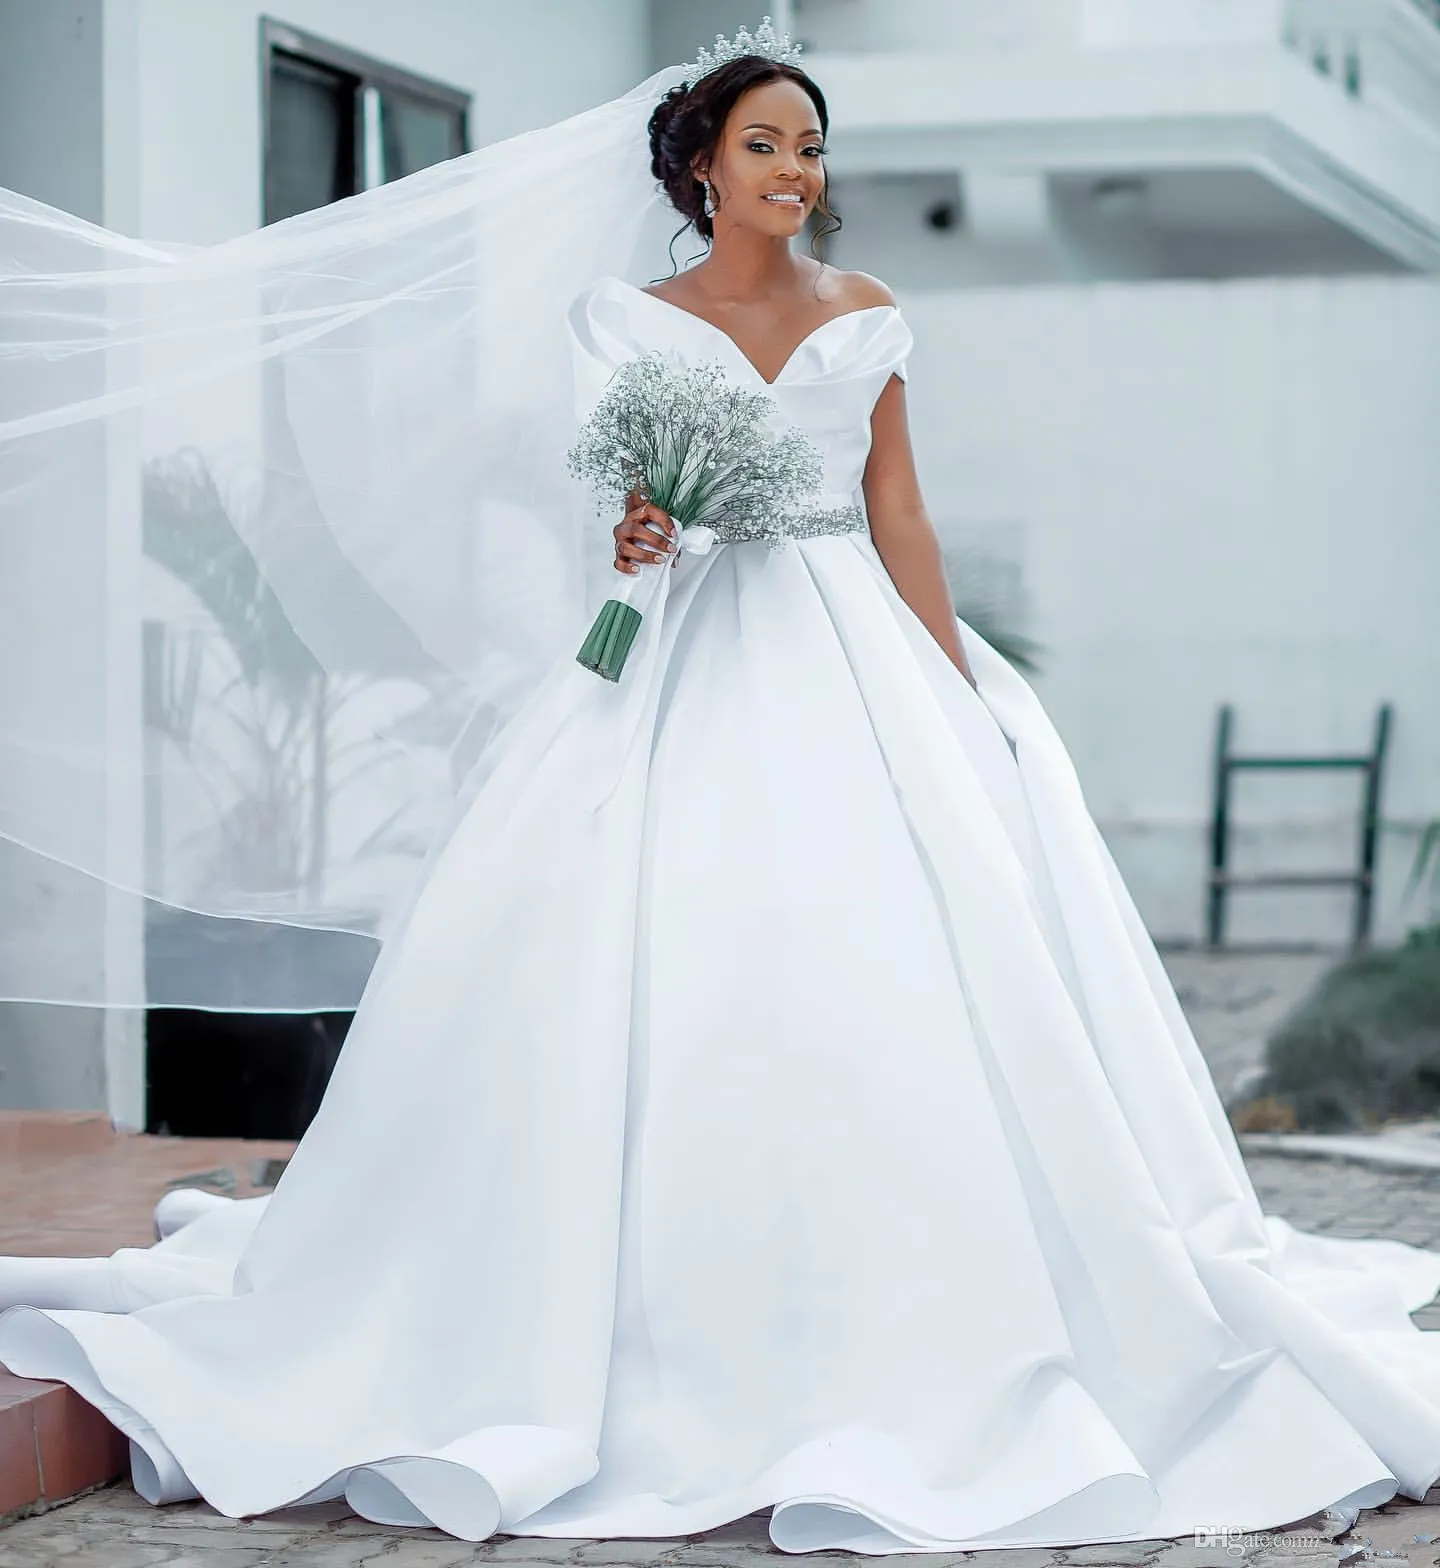 2020 New Arrival White Satin Ball Gown country Wedding Dresses Bridal gowns Vestidos De Novia princess beach Wedding Gowns